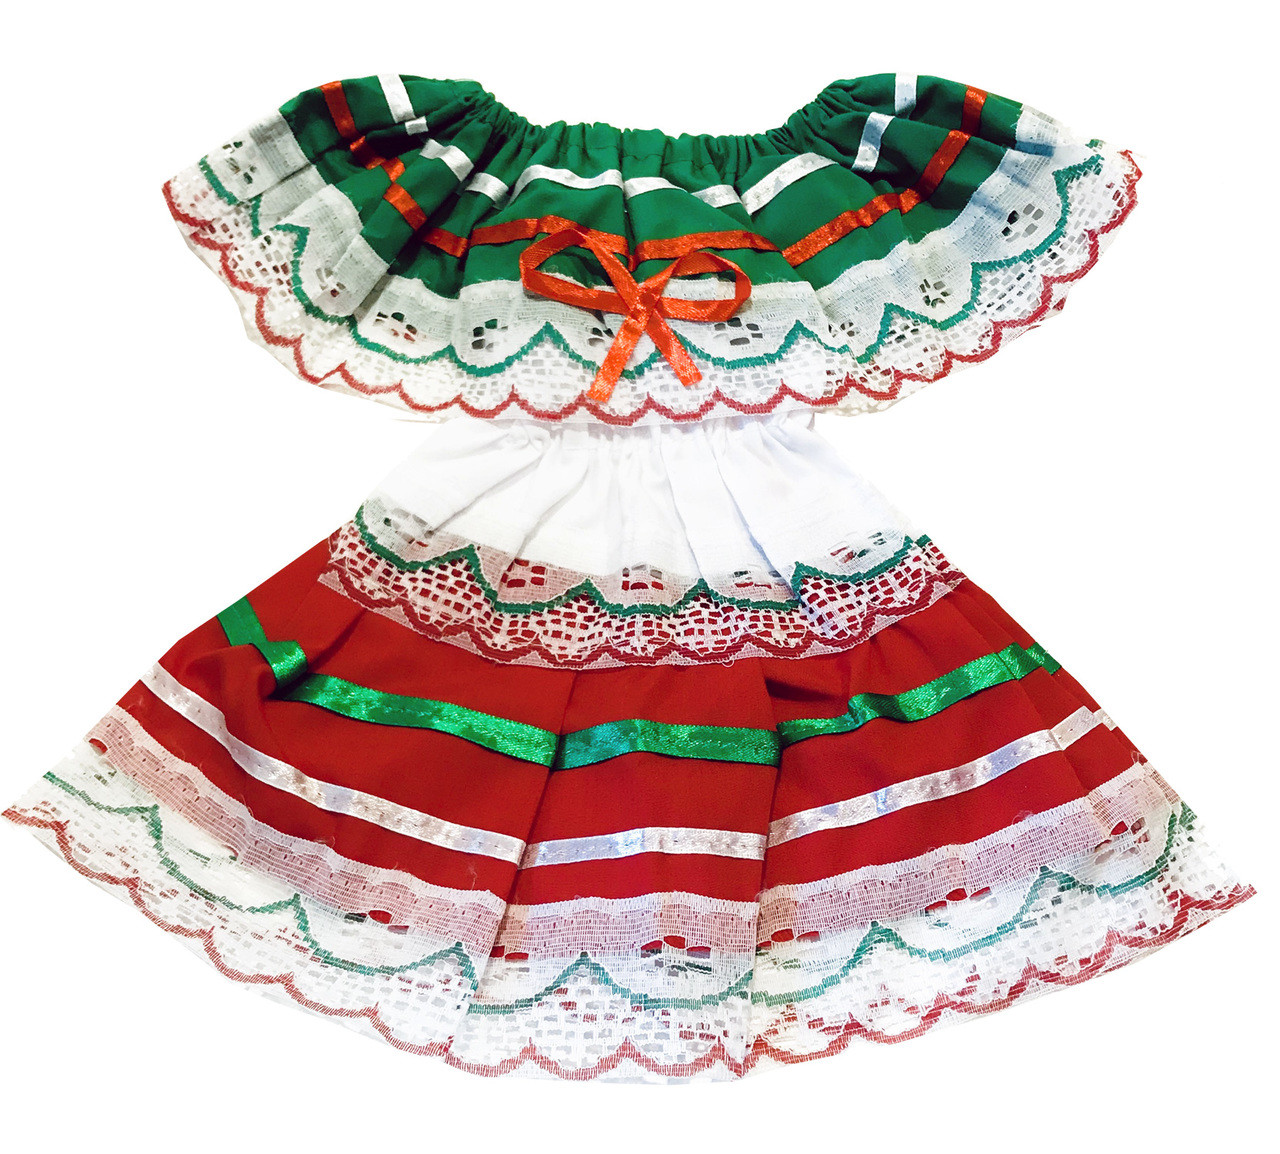 baby girl mexican fiesta dress